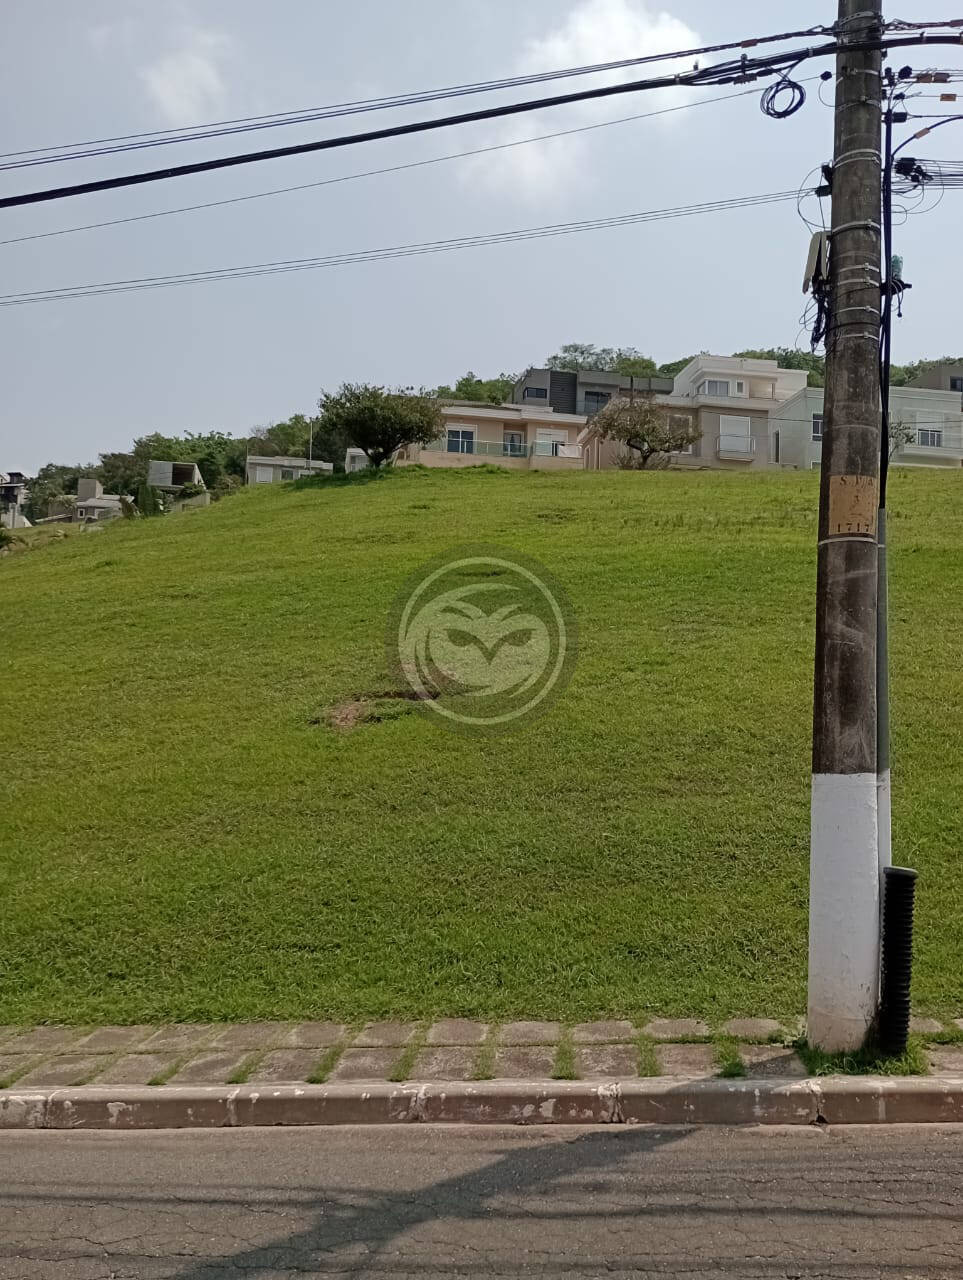 Terreno aclive  para venda alphasitio residencial - Santana de Parnaiba -SP